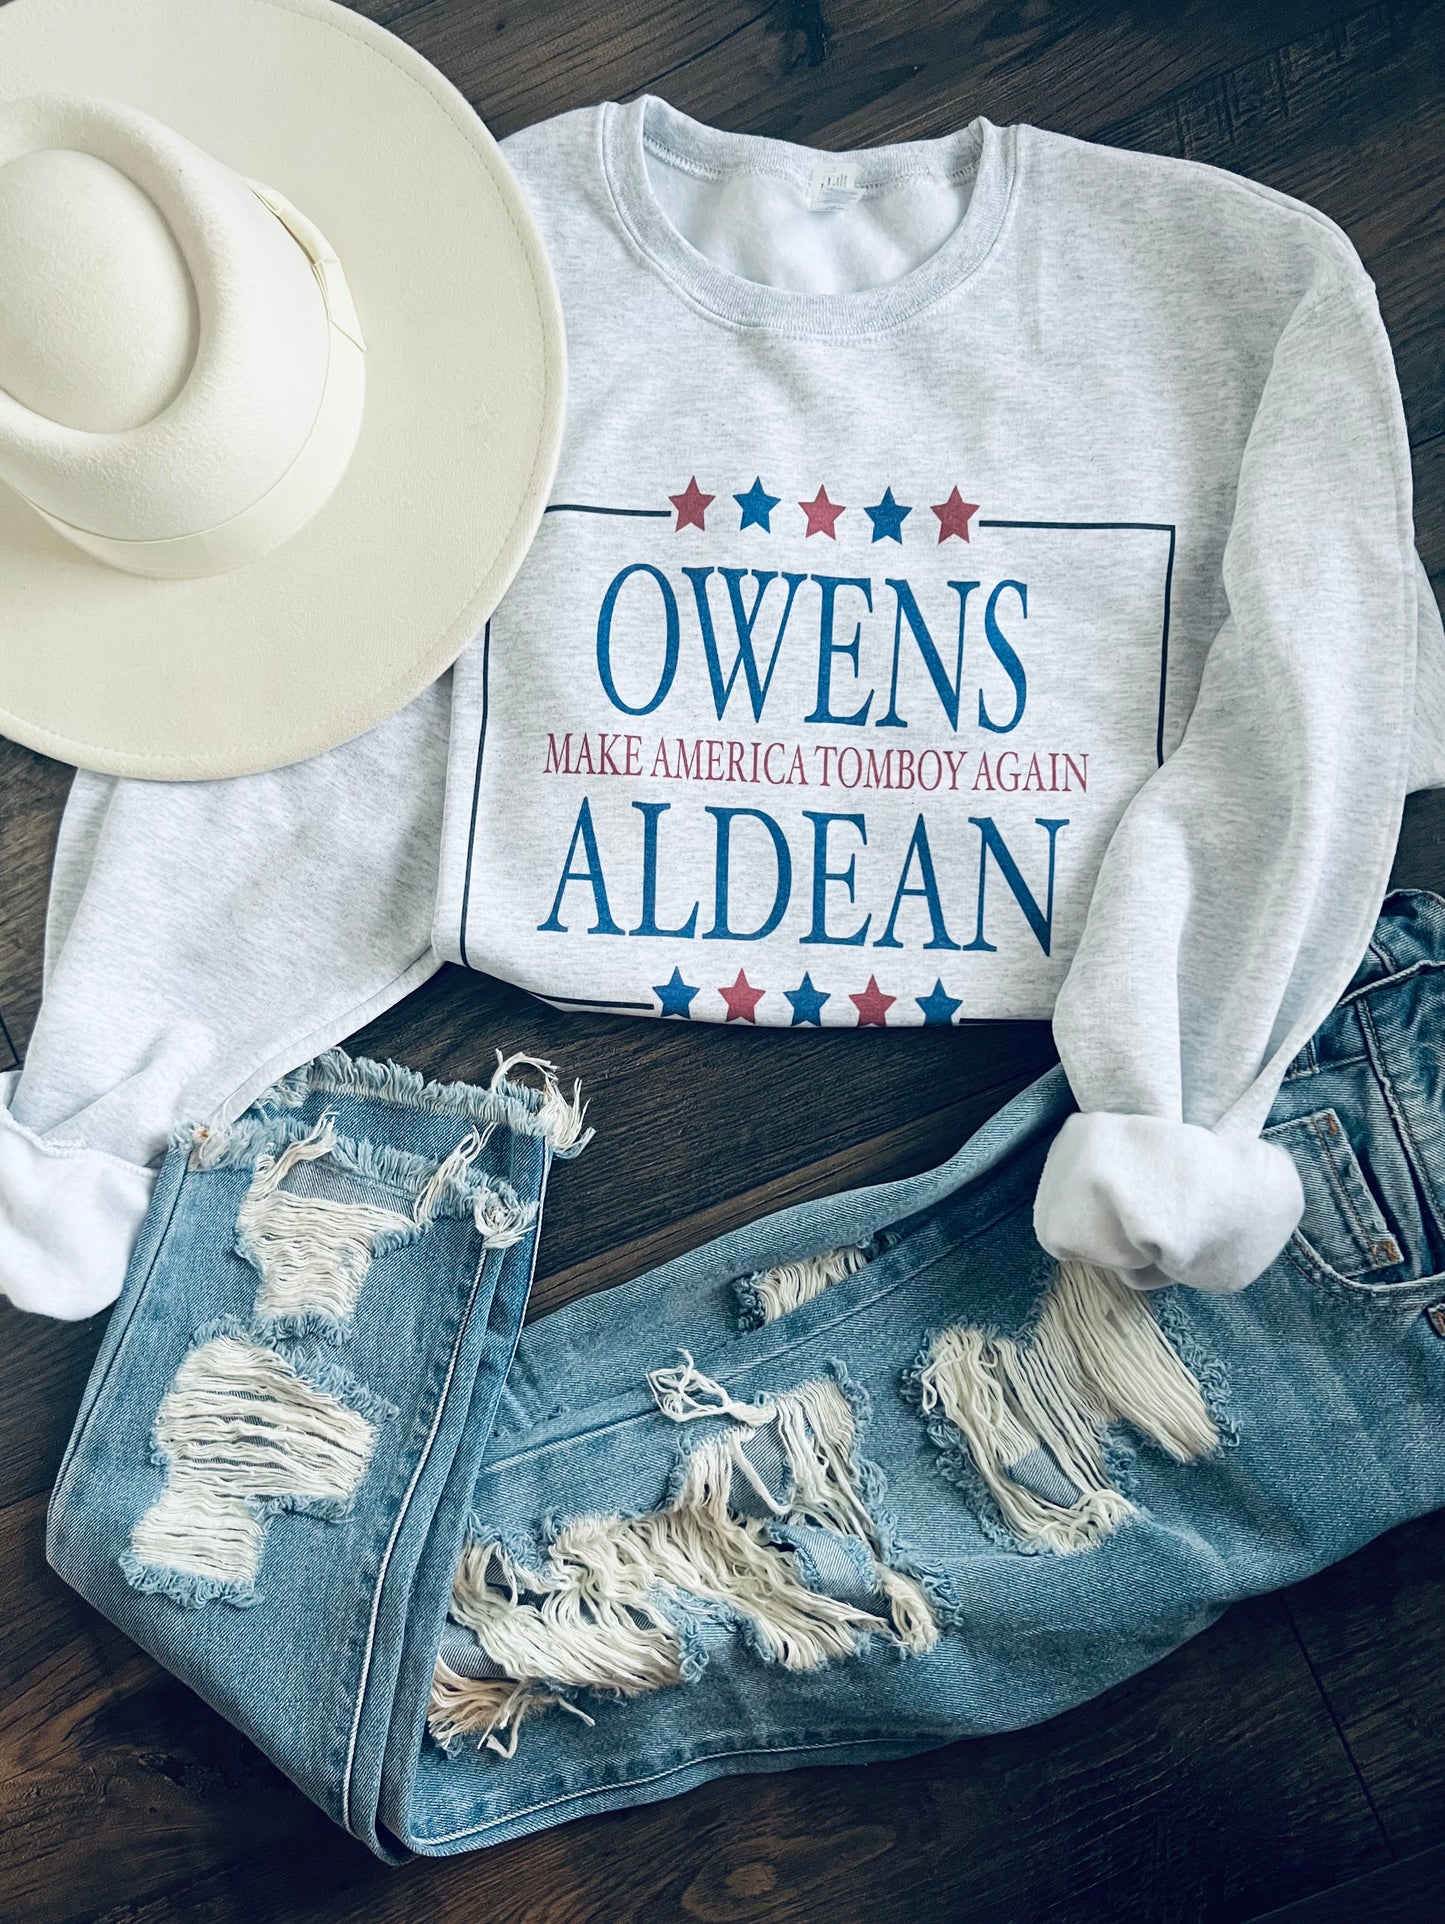 Owens Aldean- Make America Tomboy Again